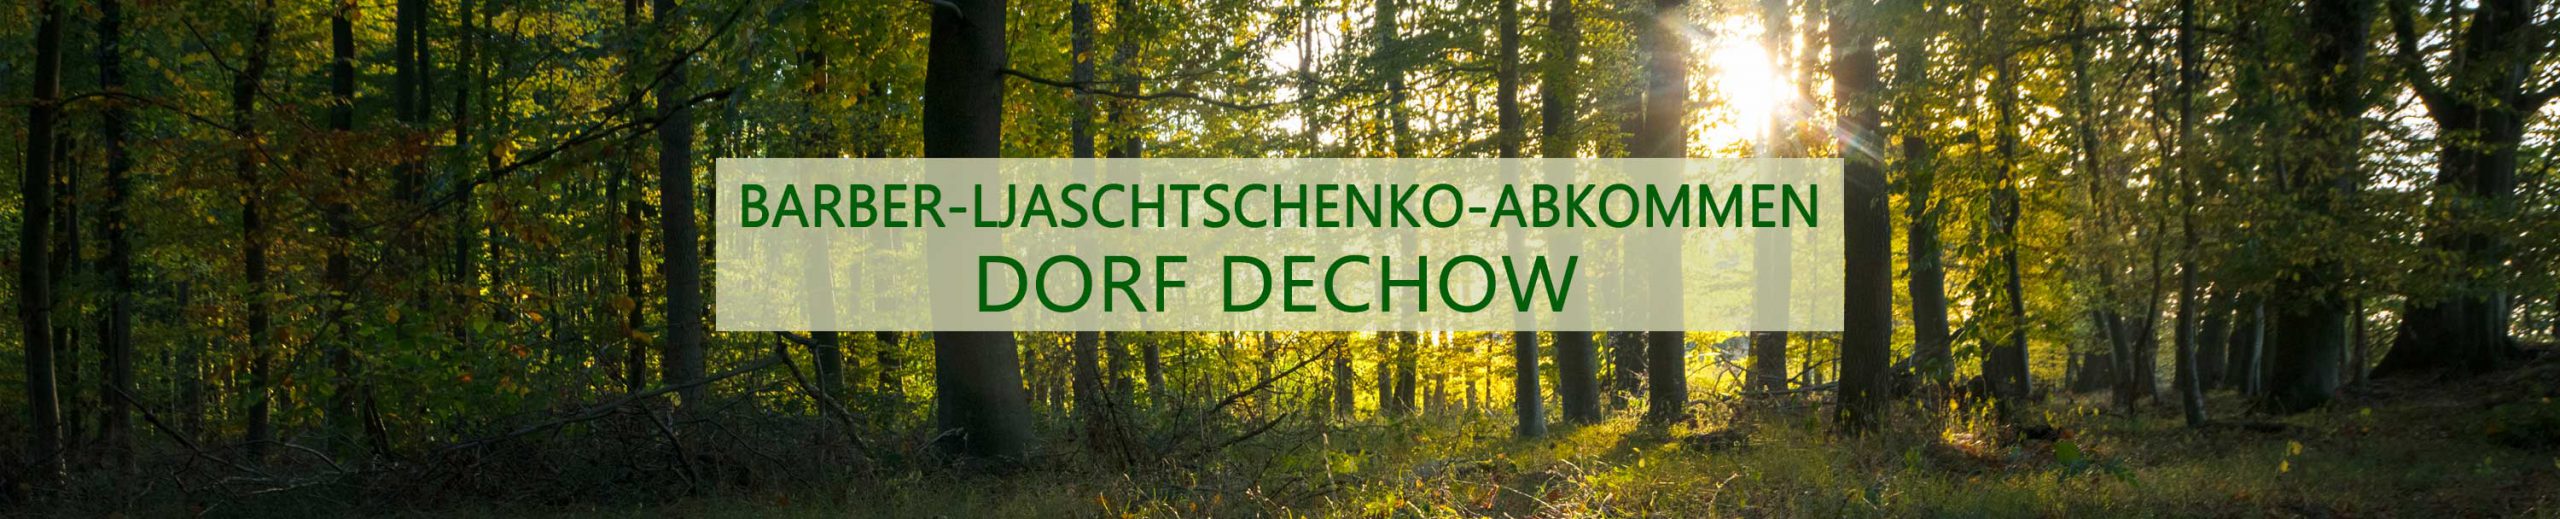 Barber–Ljaschtschenko–Abkommen Dorf Dechow